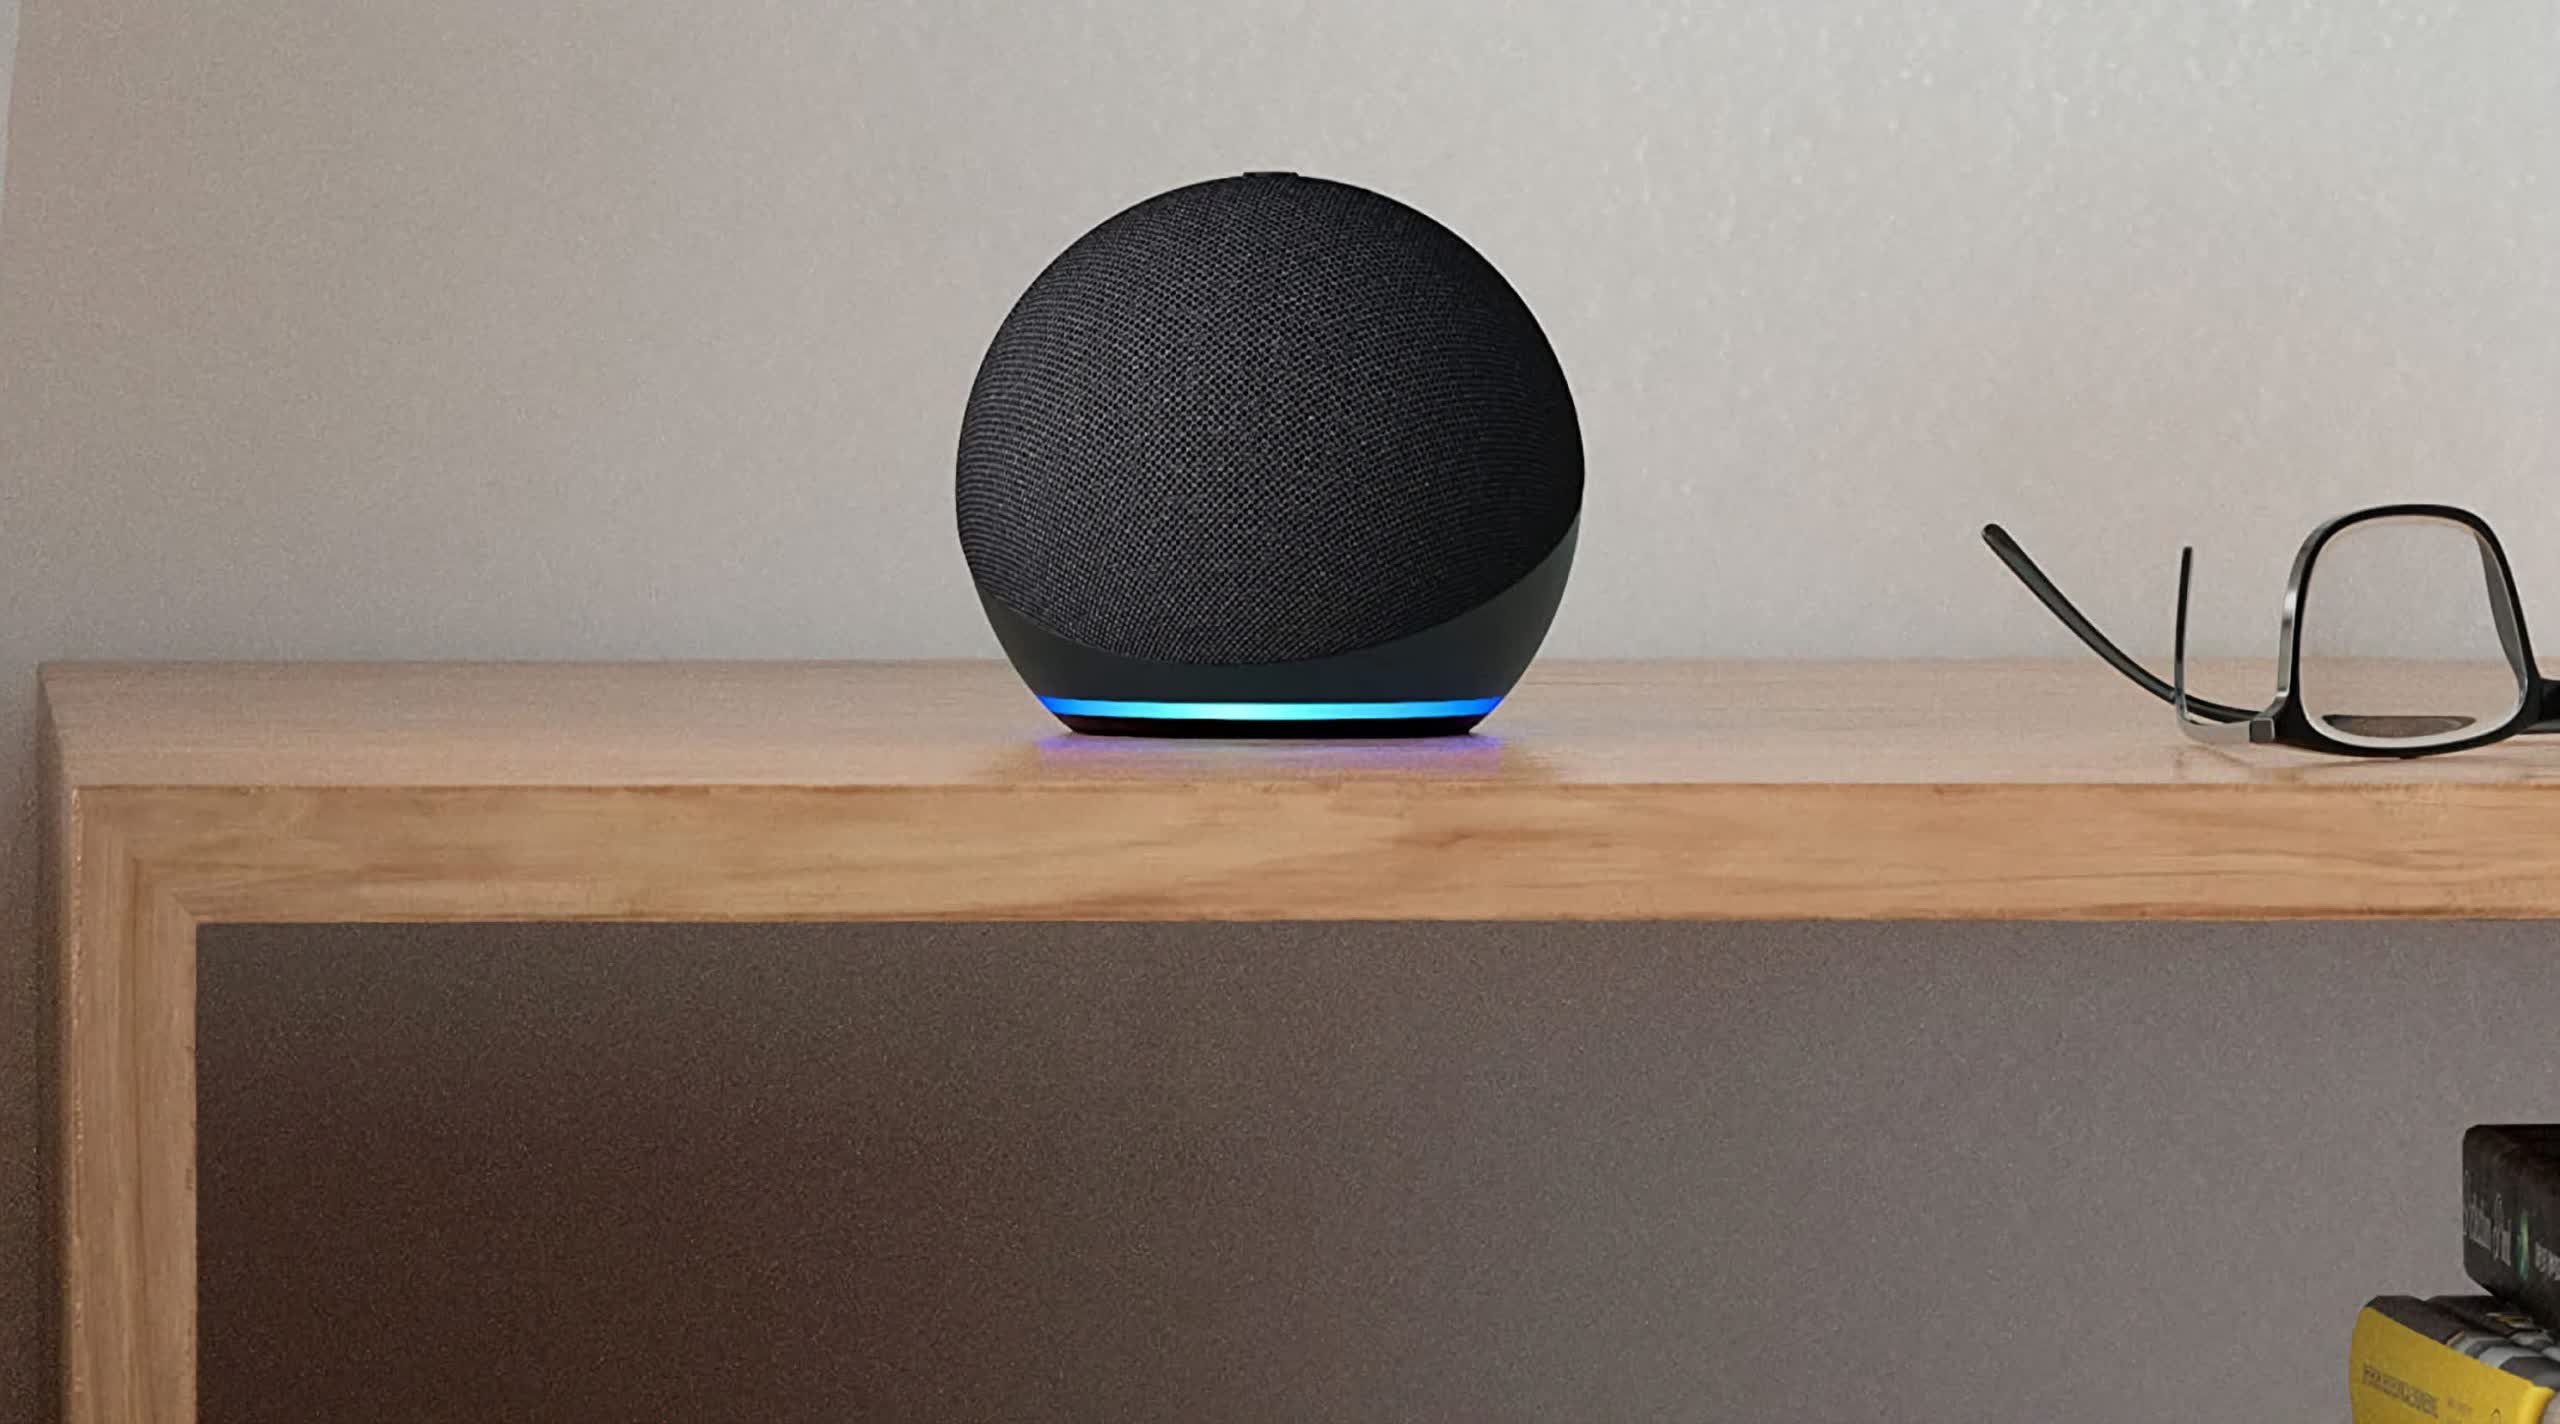 Amazon refreshes Echo speakers to act as Eero mesh network nodes